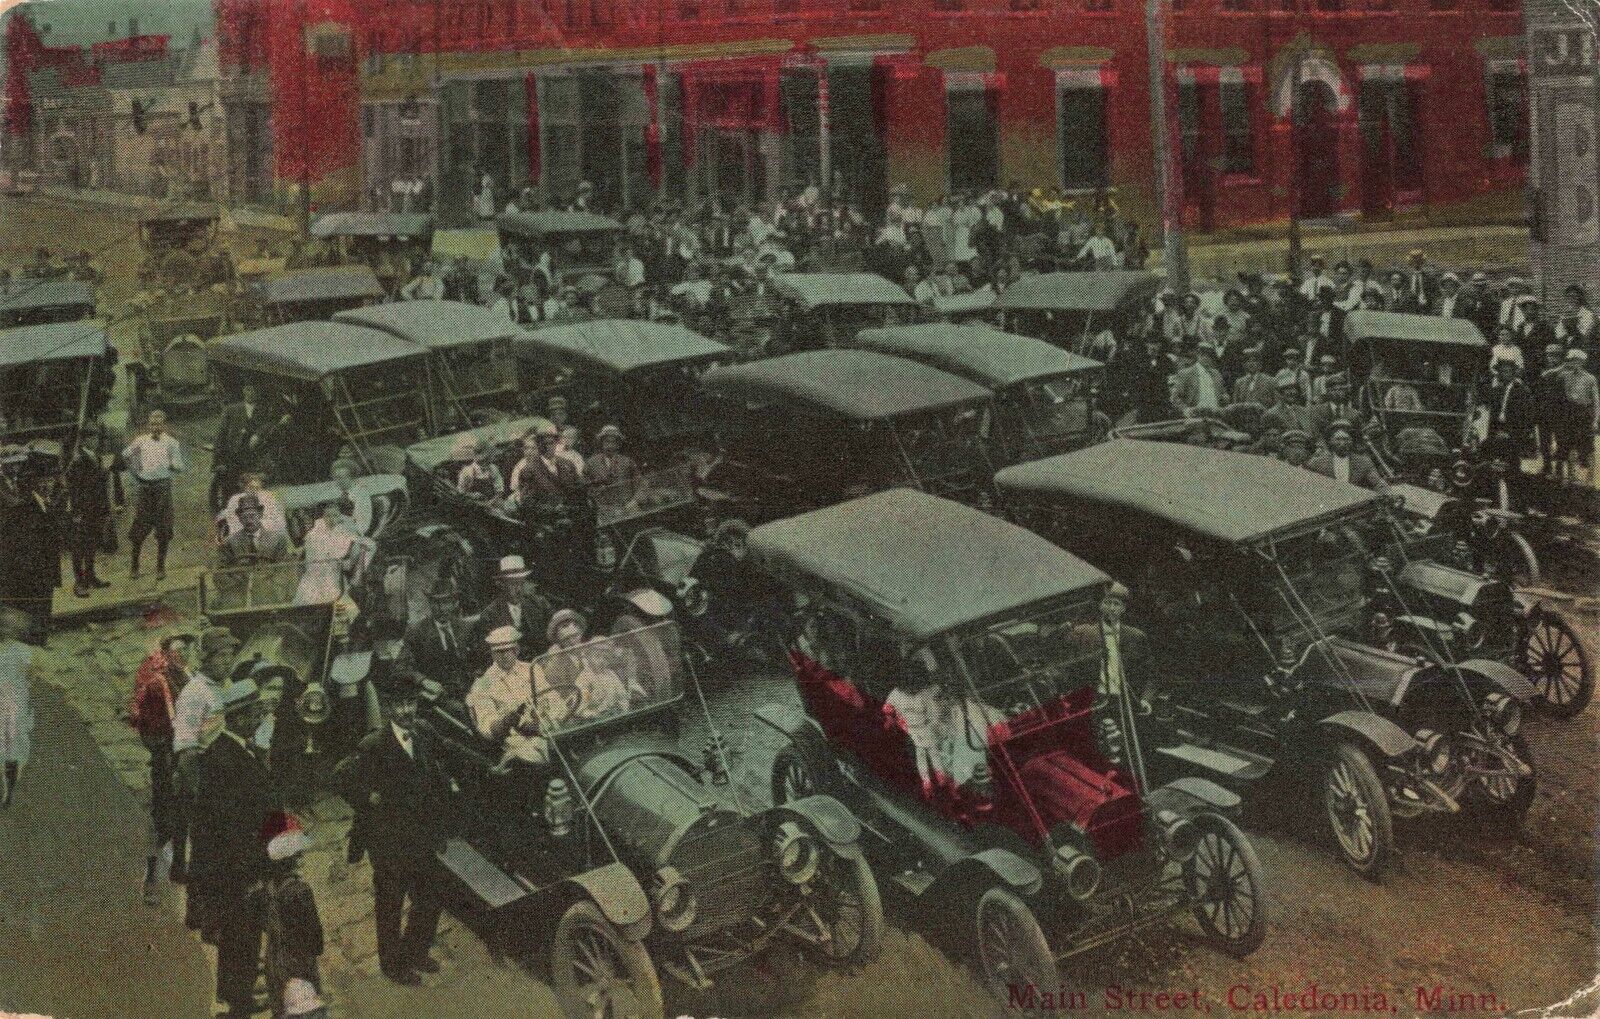 Main Street Caledonia Minnesota MN Old Cars Crowd of People 1913 Postcard